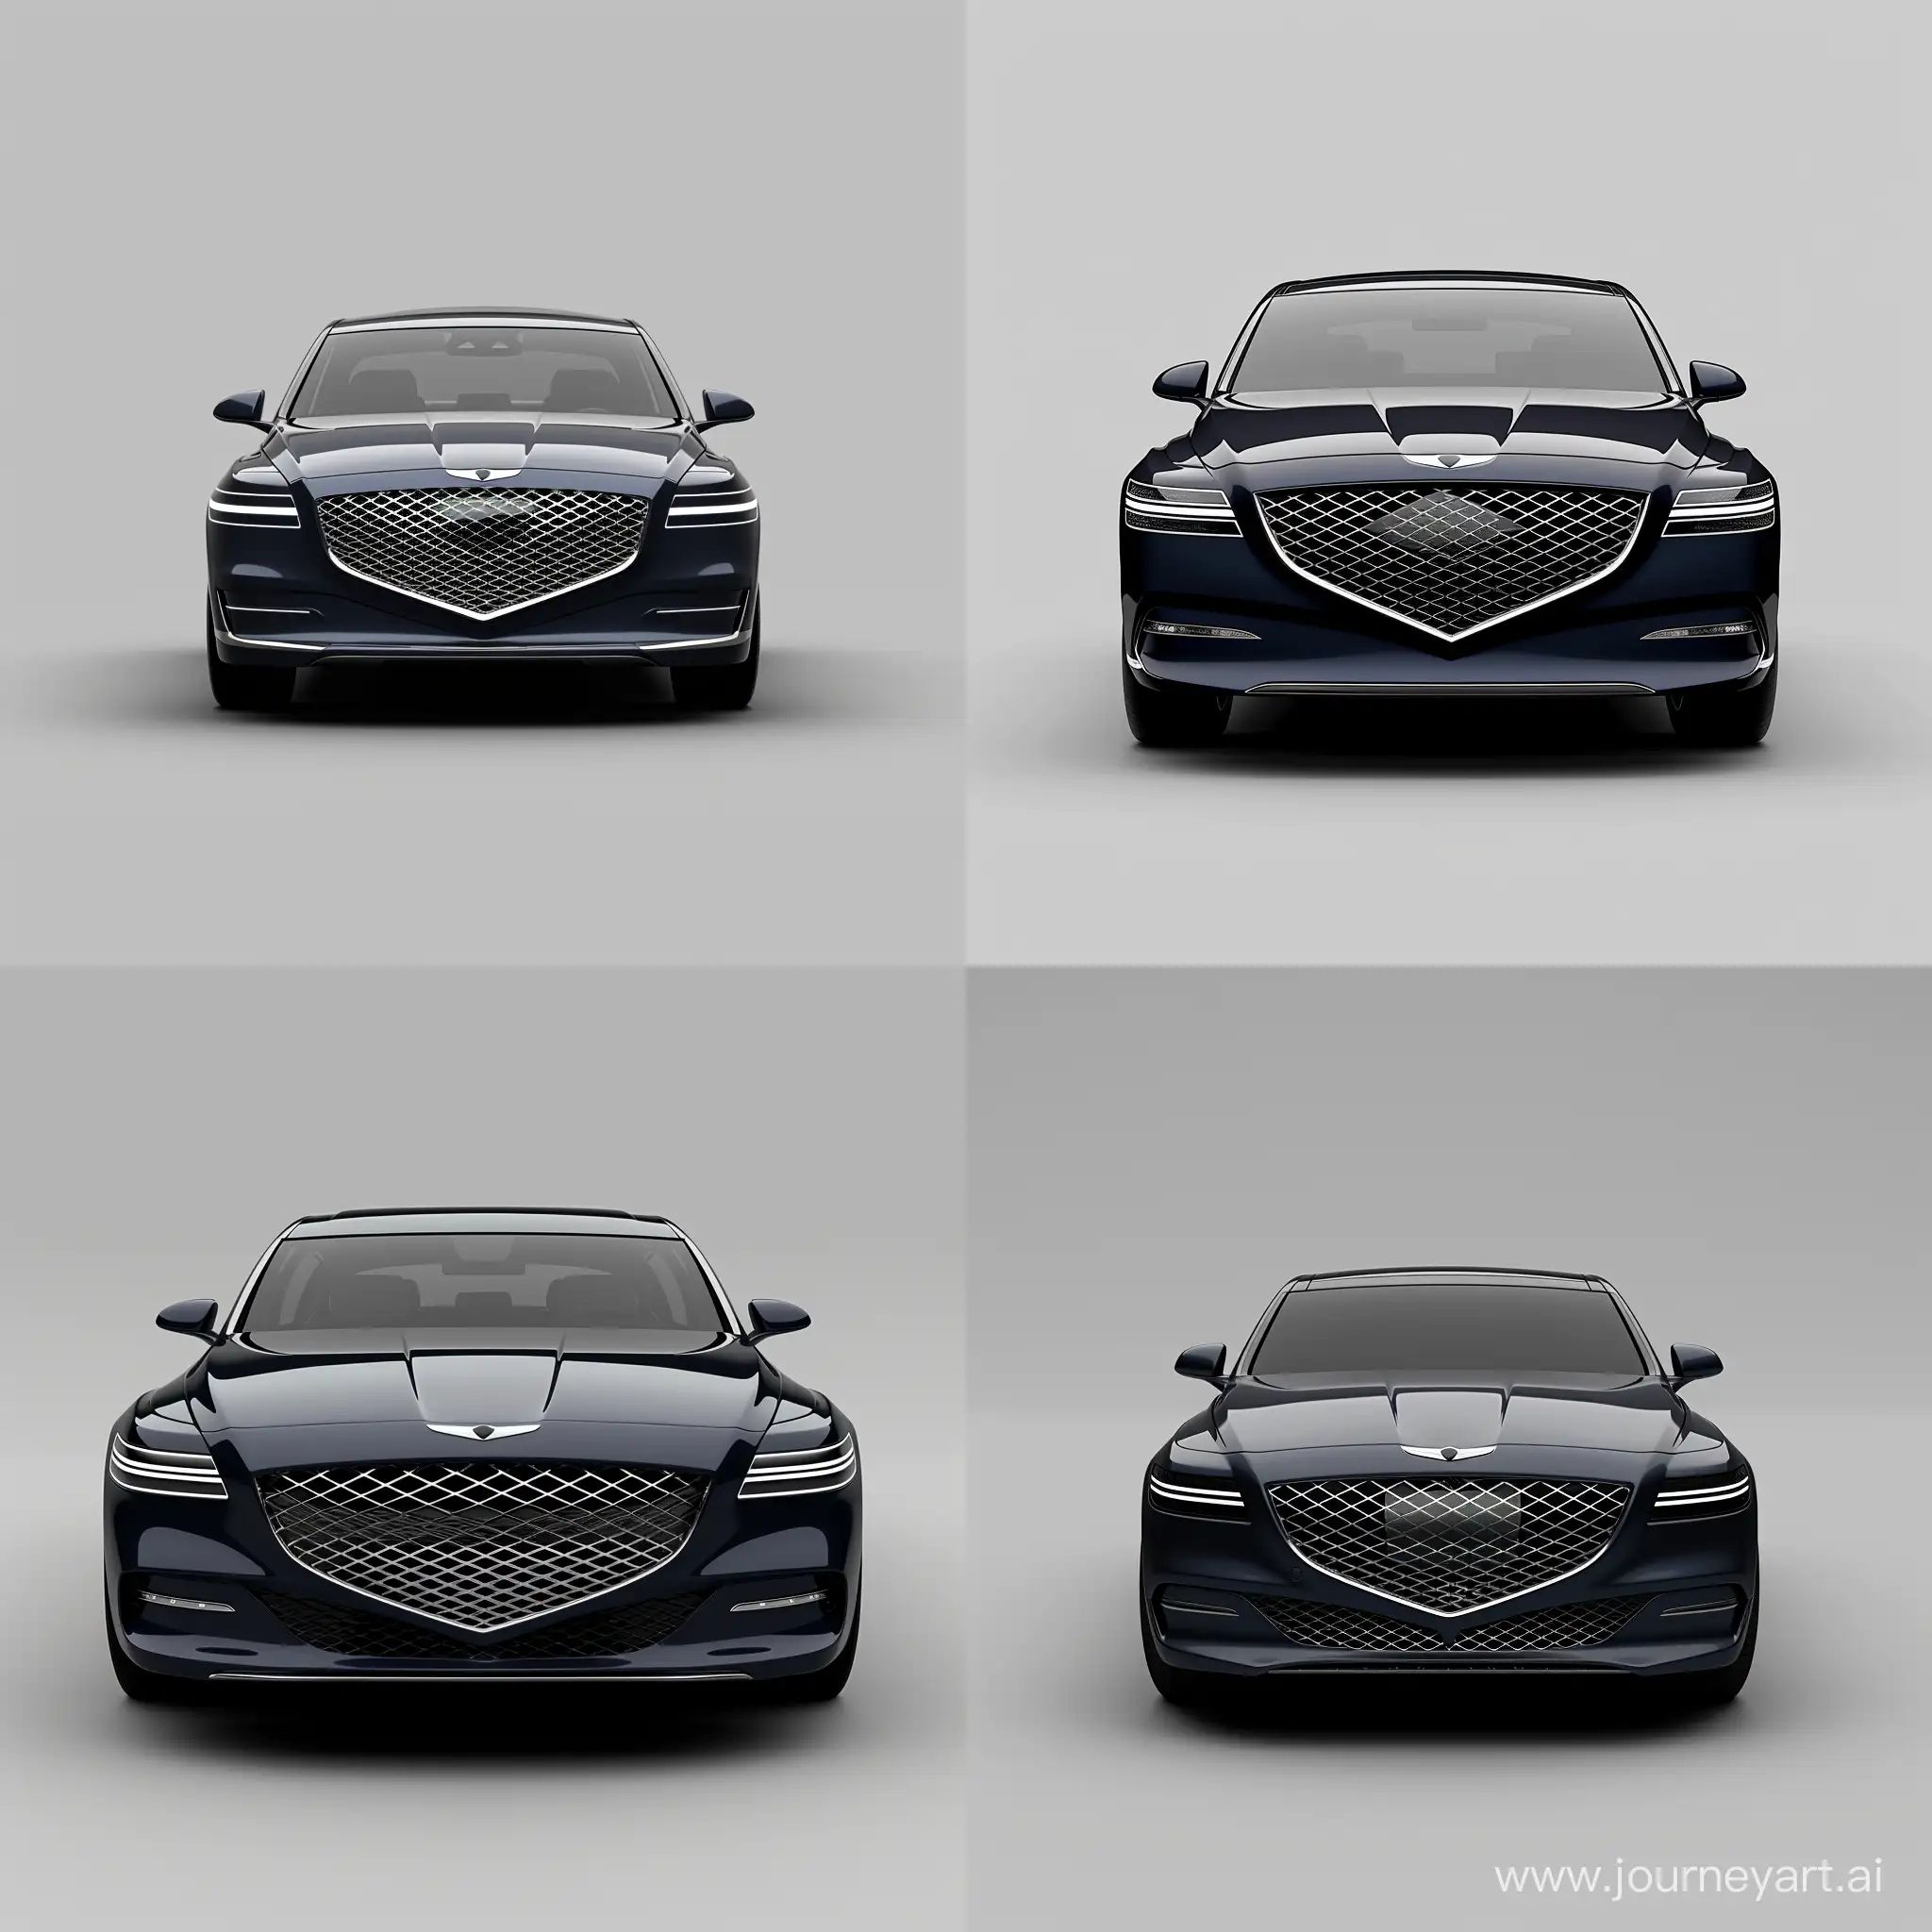 Minimalist-3D-Illustration-of-Genesis-G90-Car-Navy-Blue-Body-on-Simple-Gray-Background